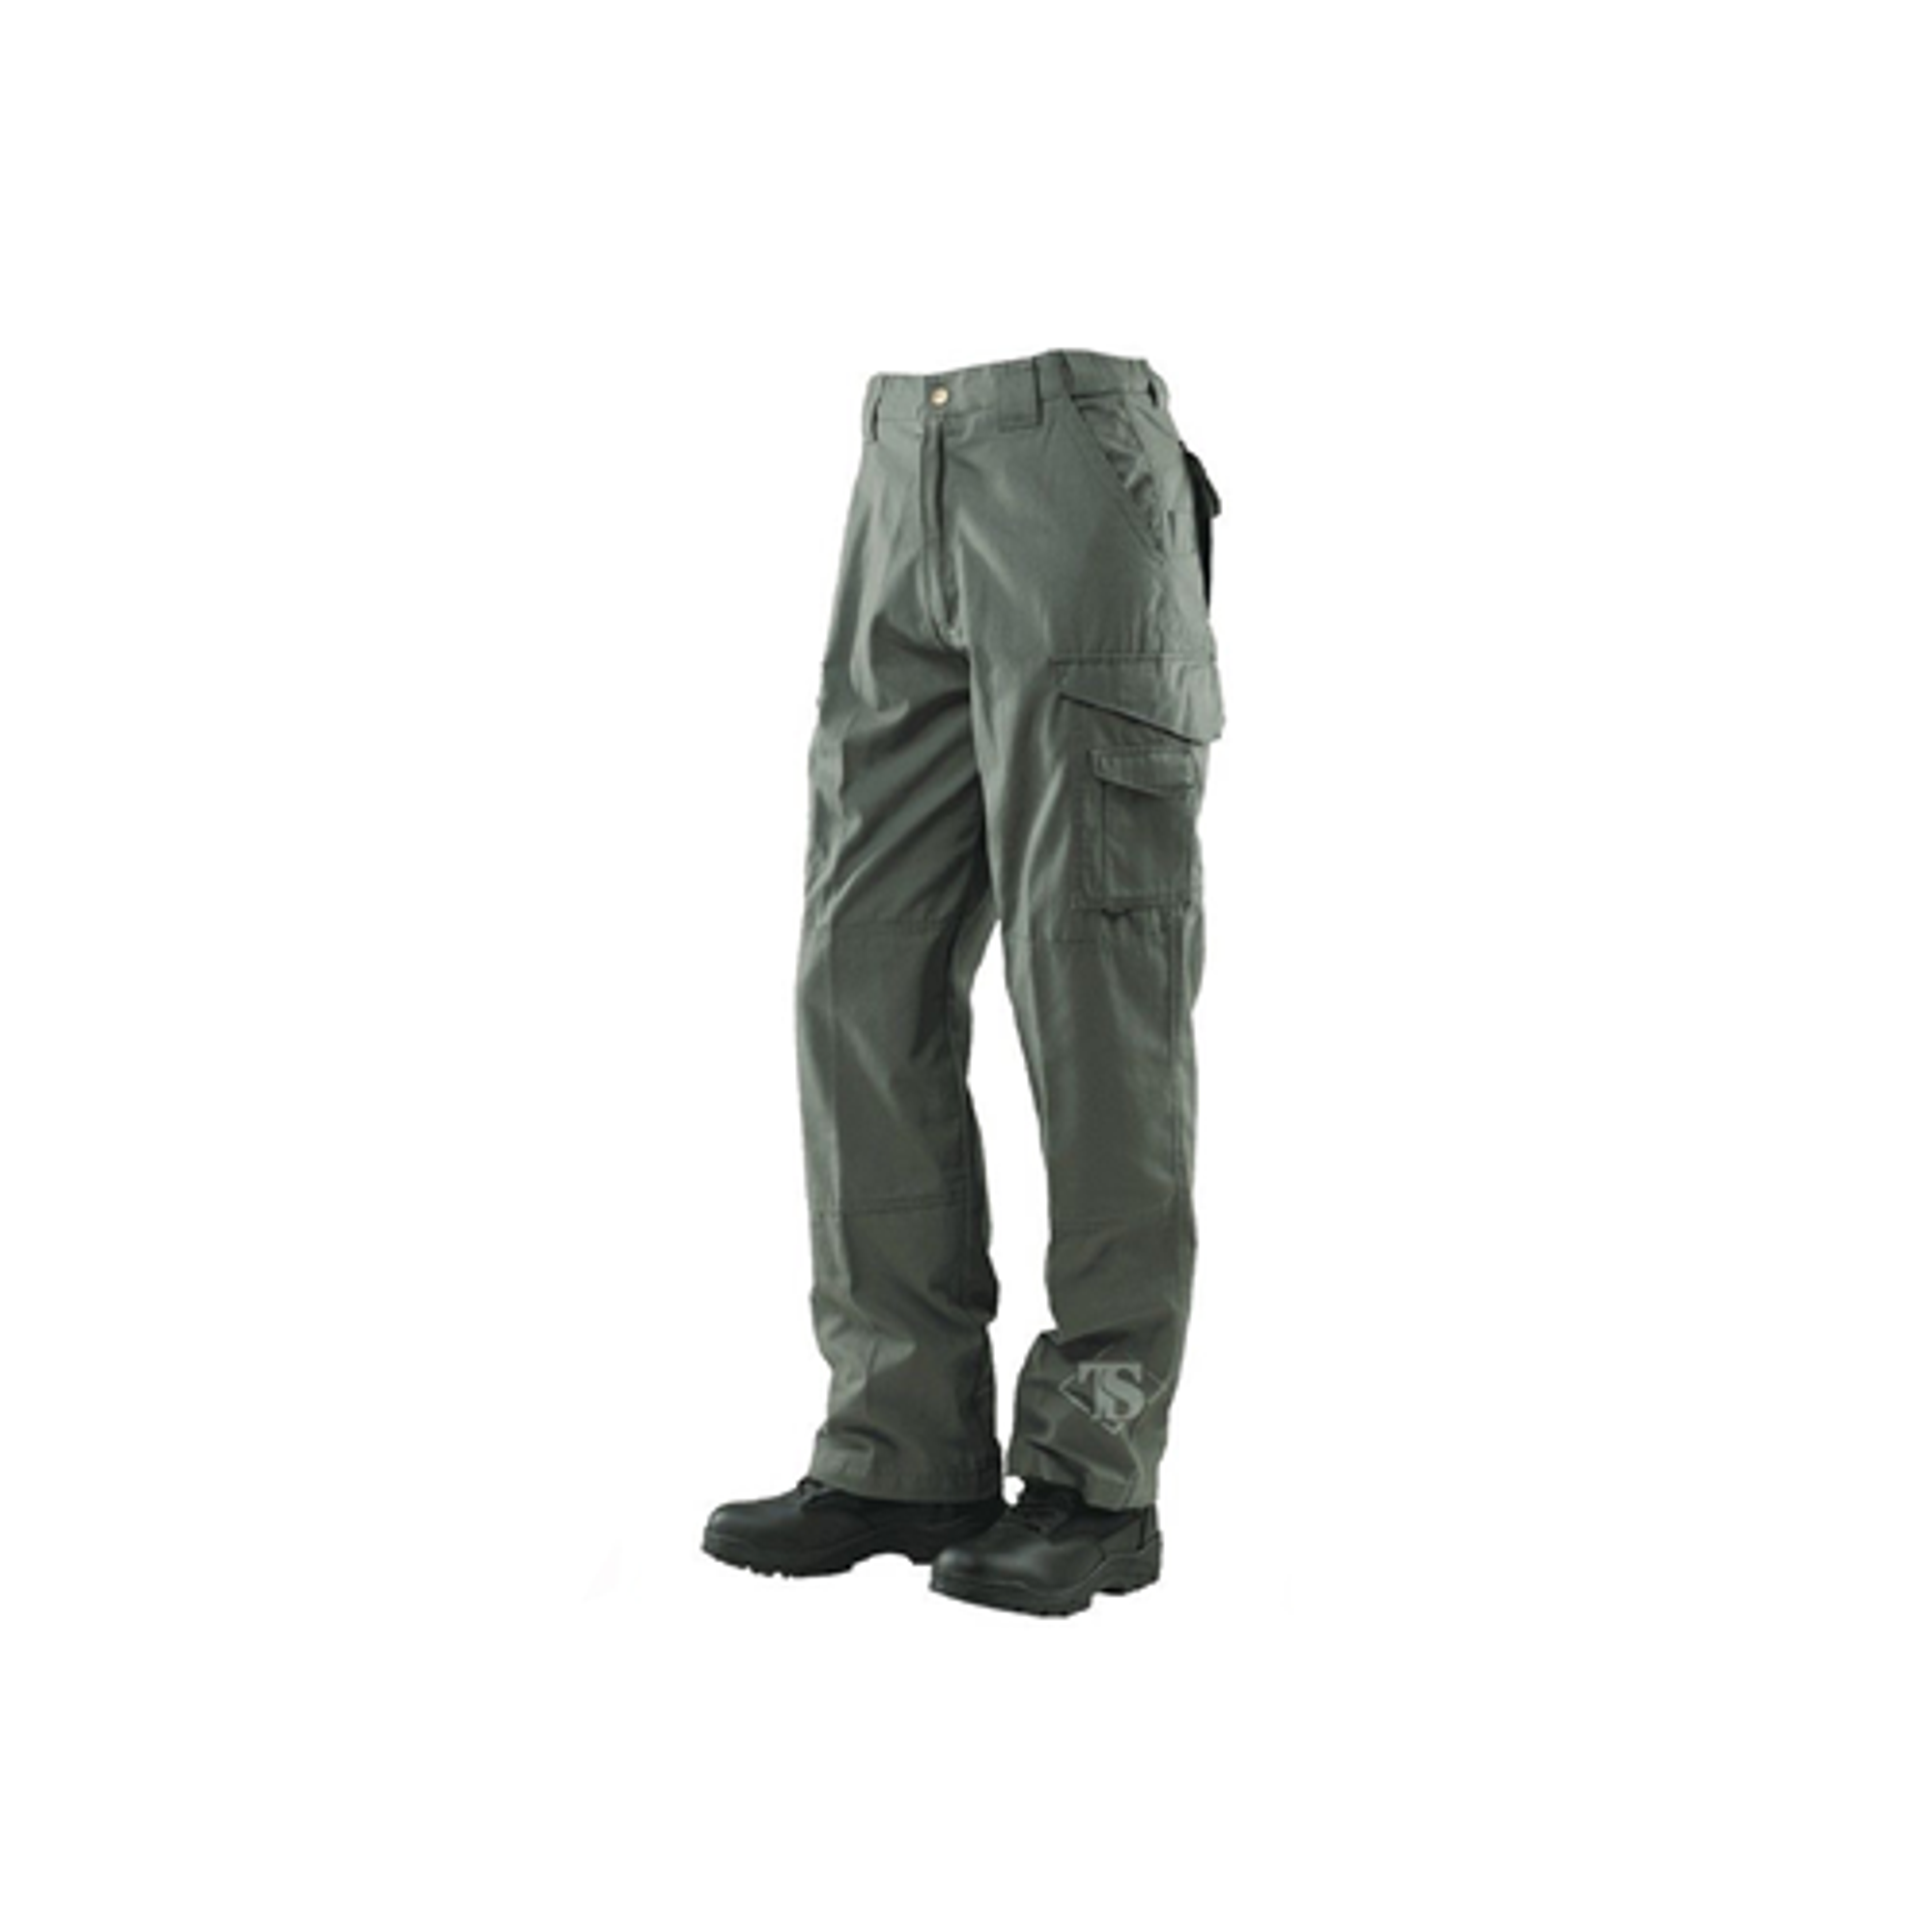 24-7 Original Tactical Pants - 6.5oz - Od Green - KRTSP-1064088